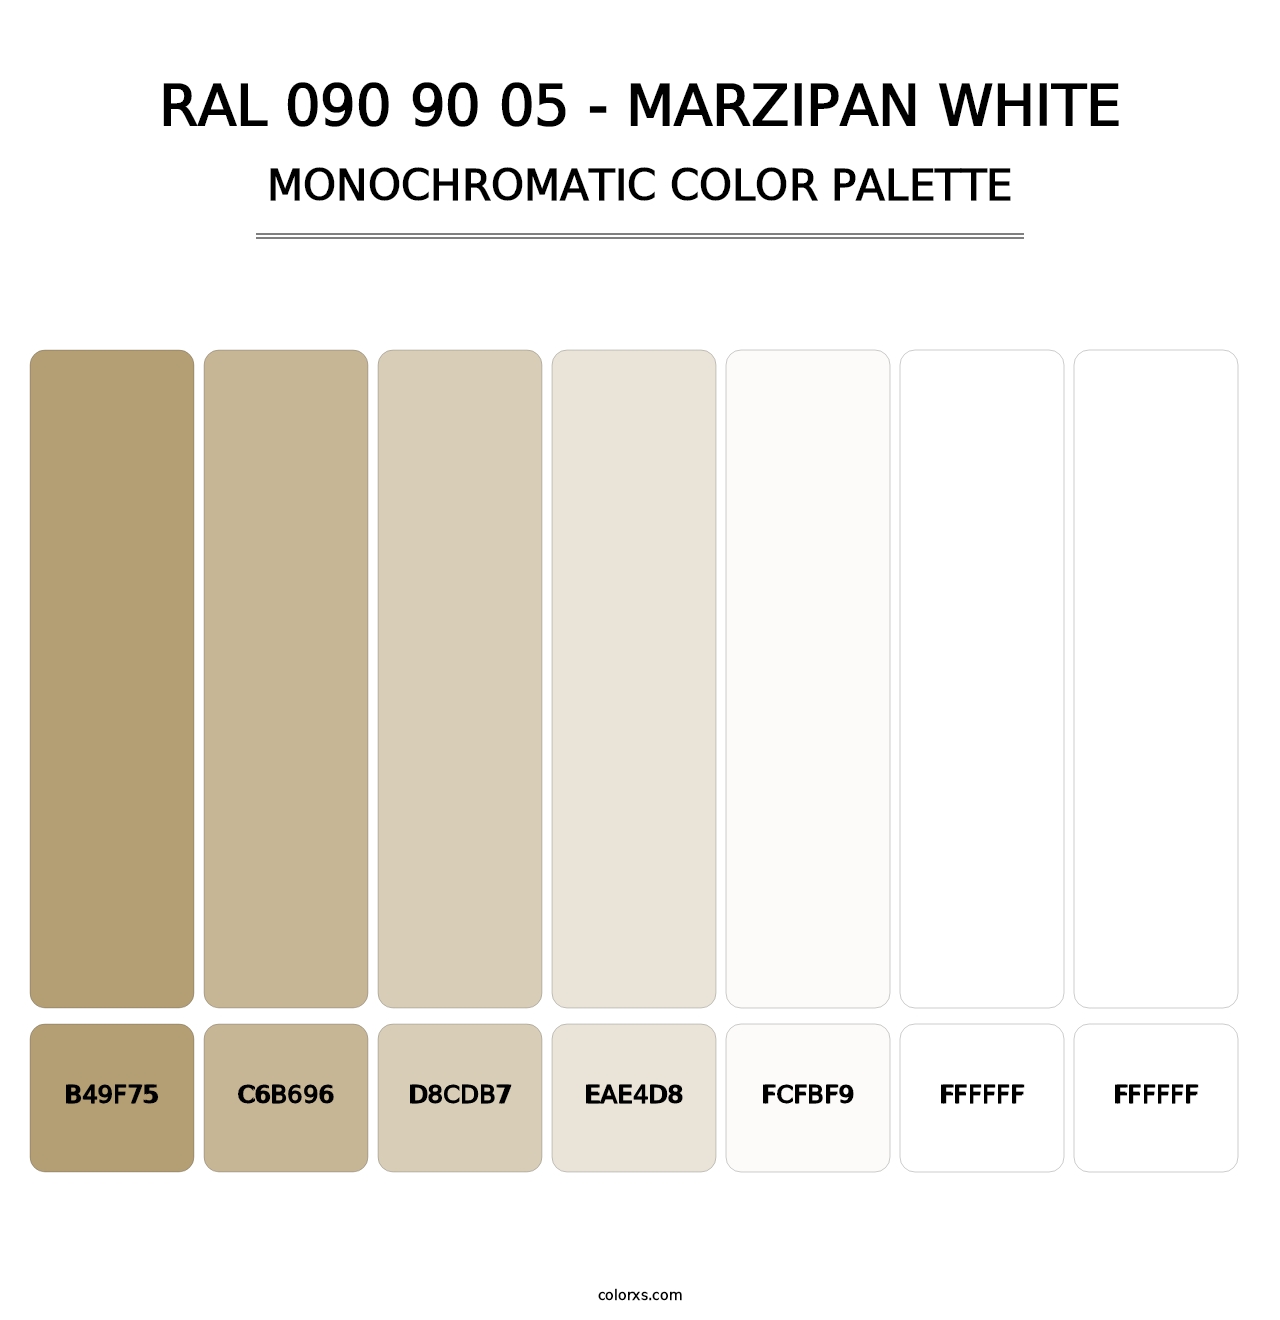 RAL 090 90 05 - Marzipan White - Monochromatic Color Palette